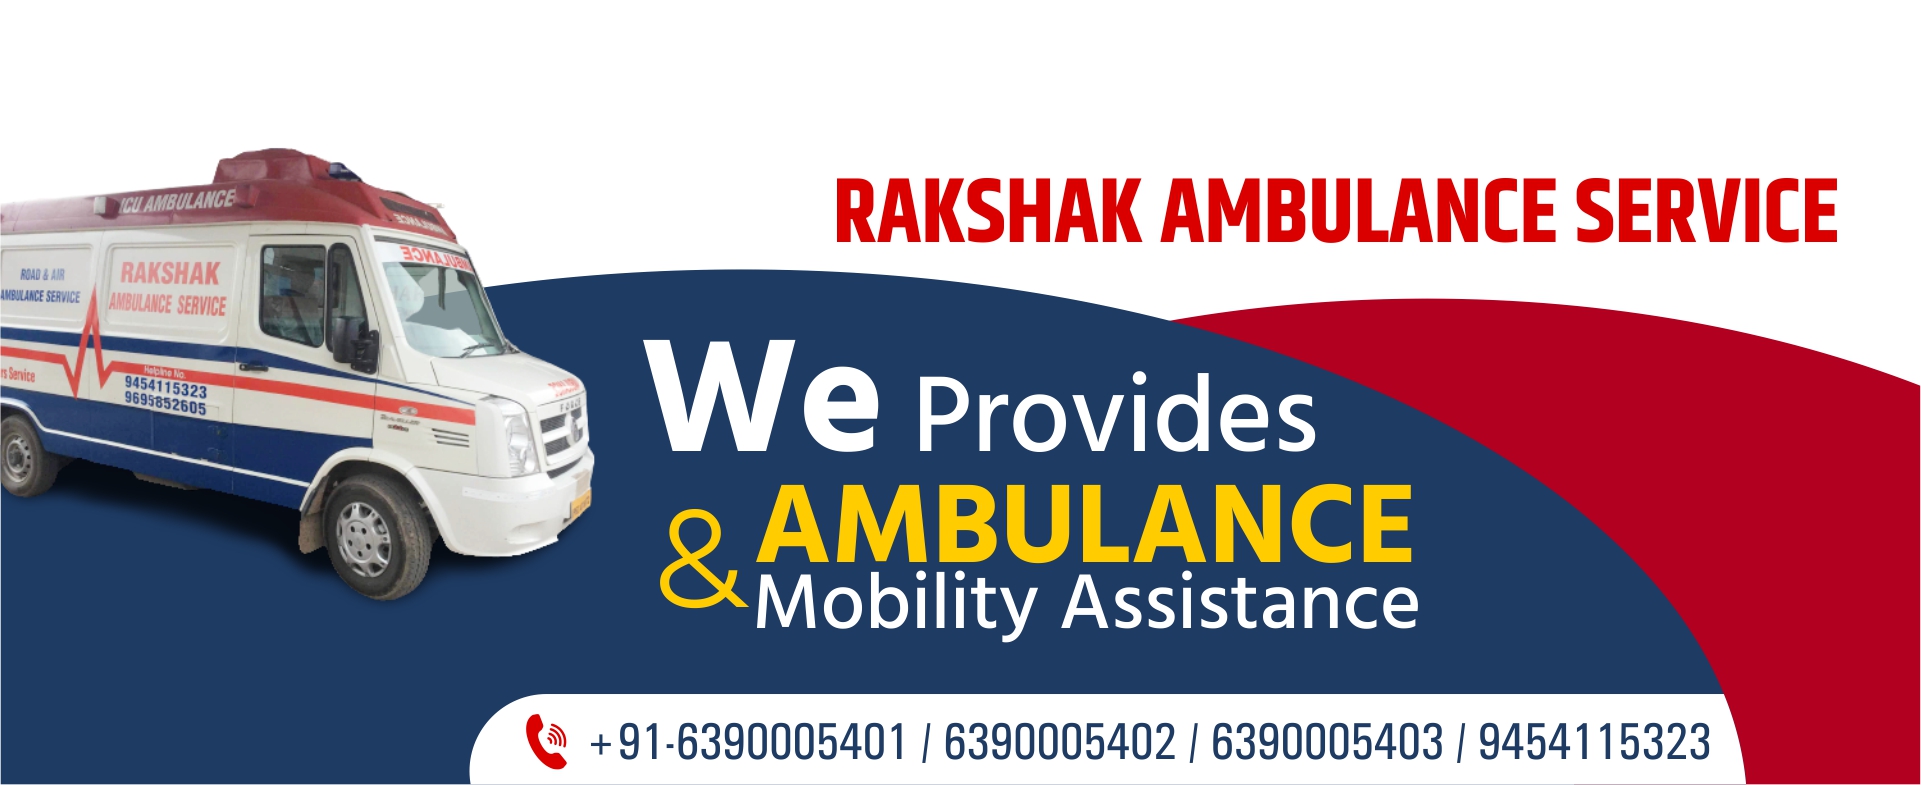 Best Ambulance Service in Varanasi